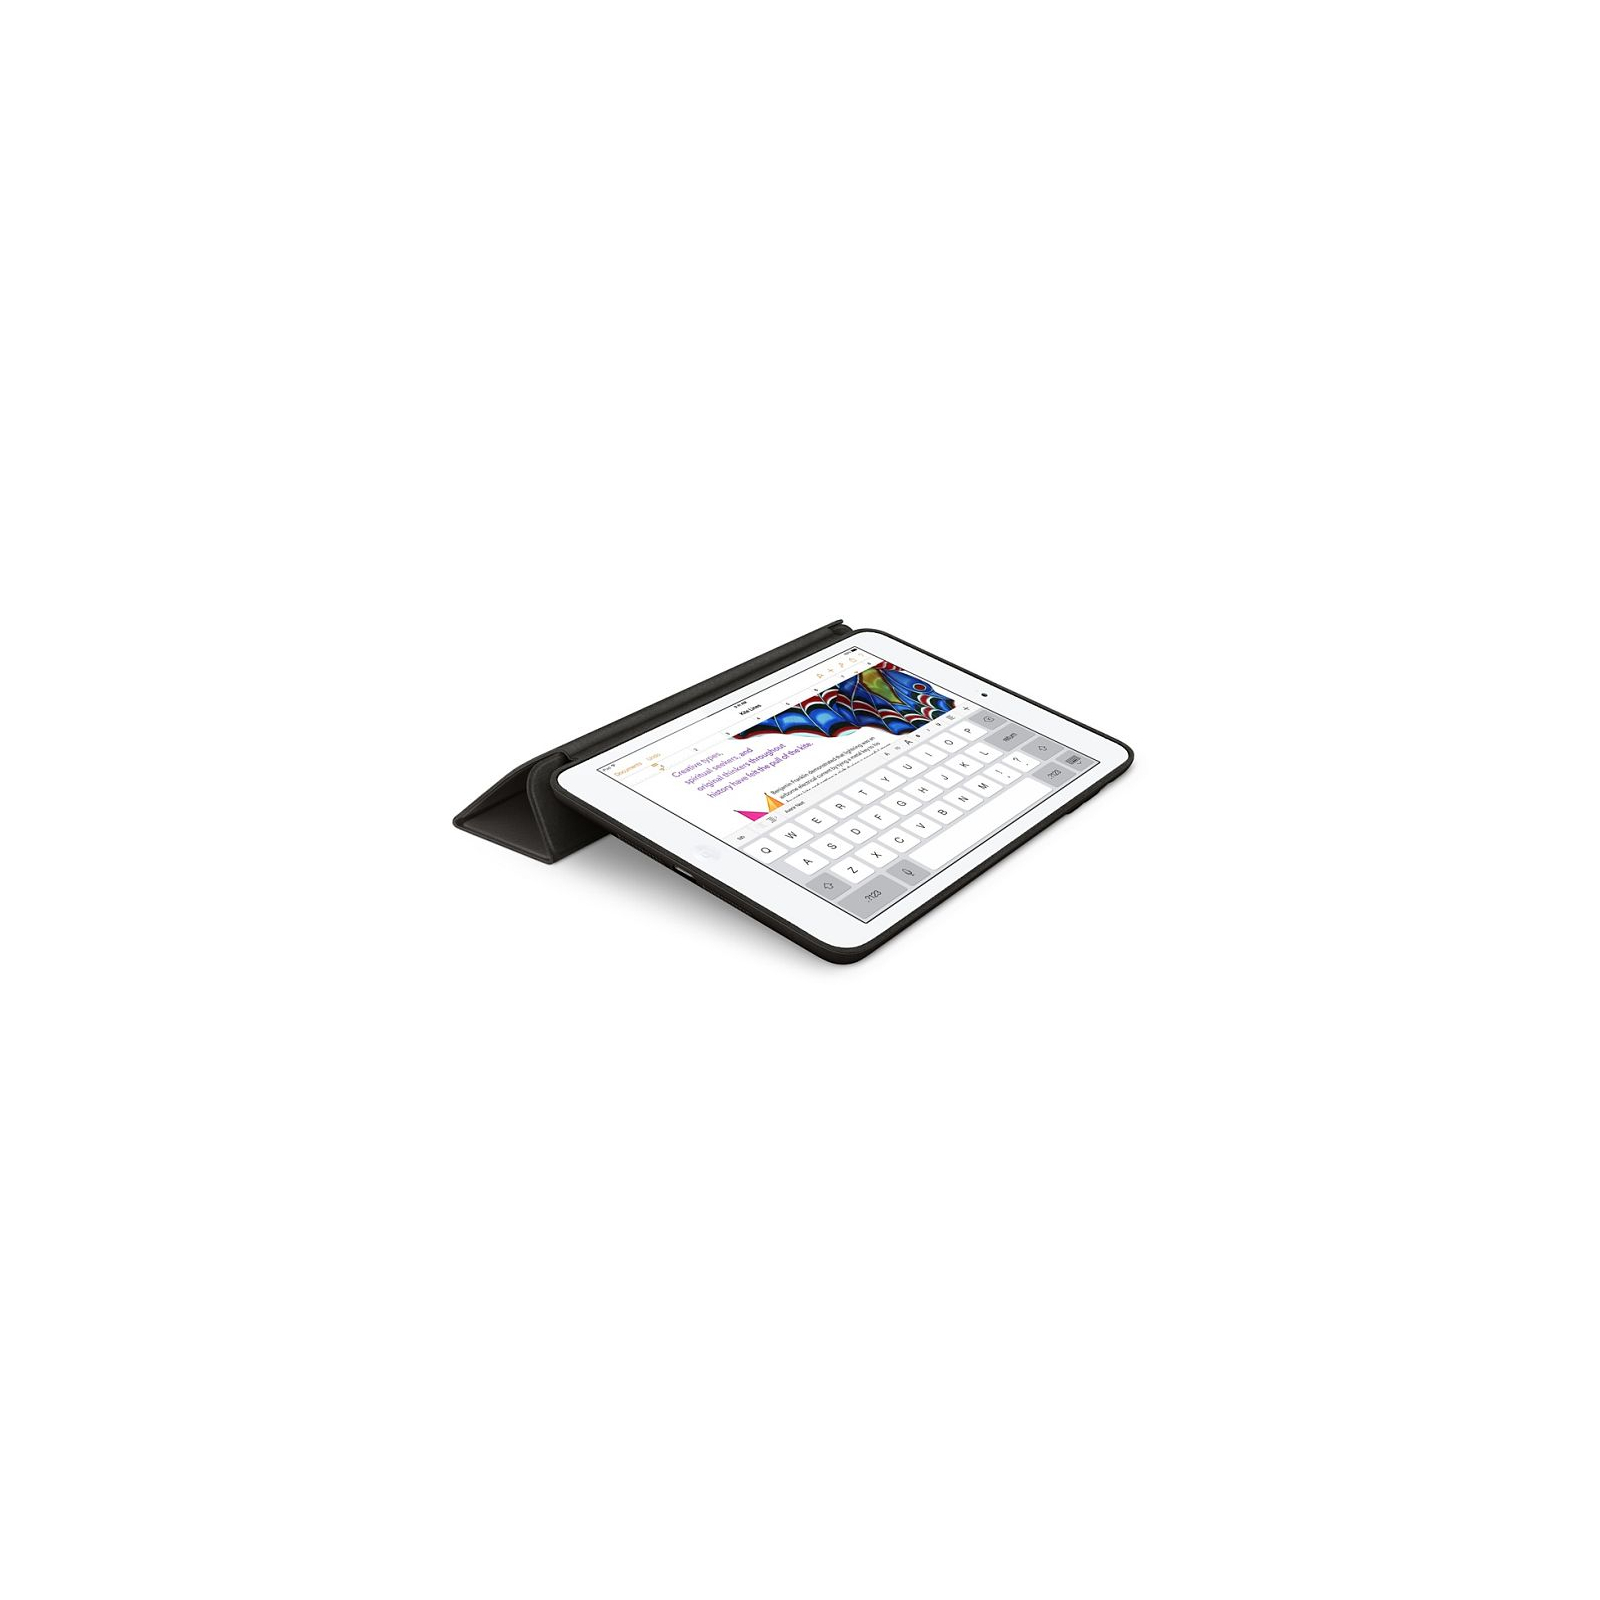 Чехол для планшета Apple Smart Case для iPad mini /black (ME710ZM/A) изображение 4